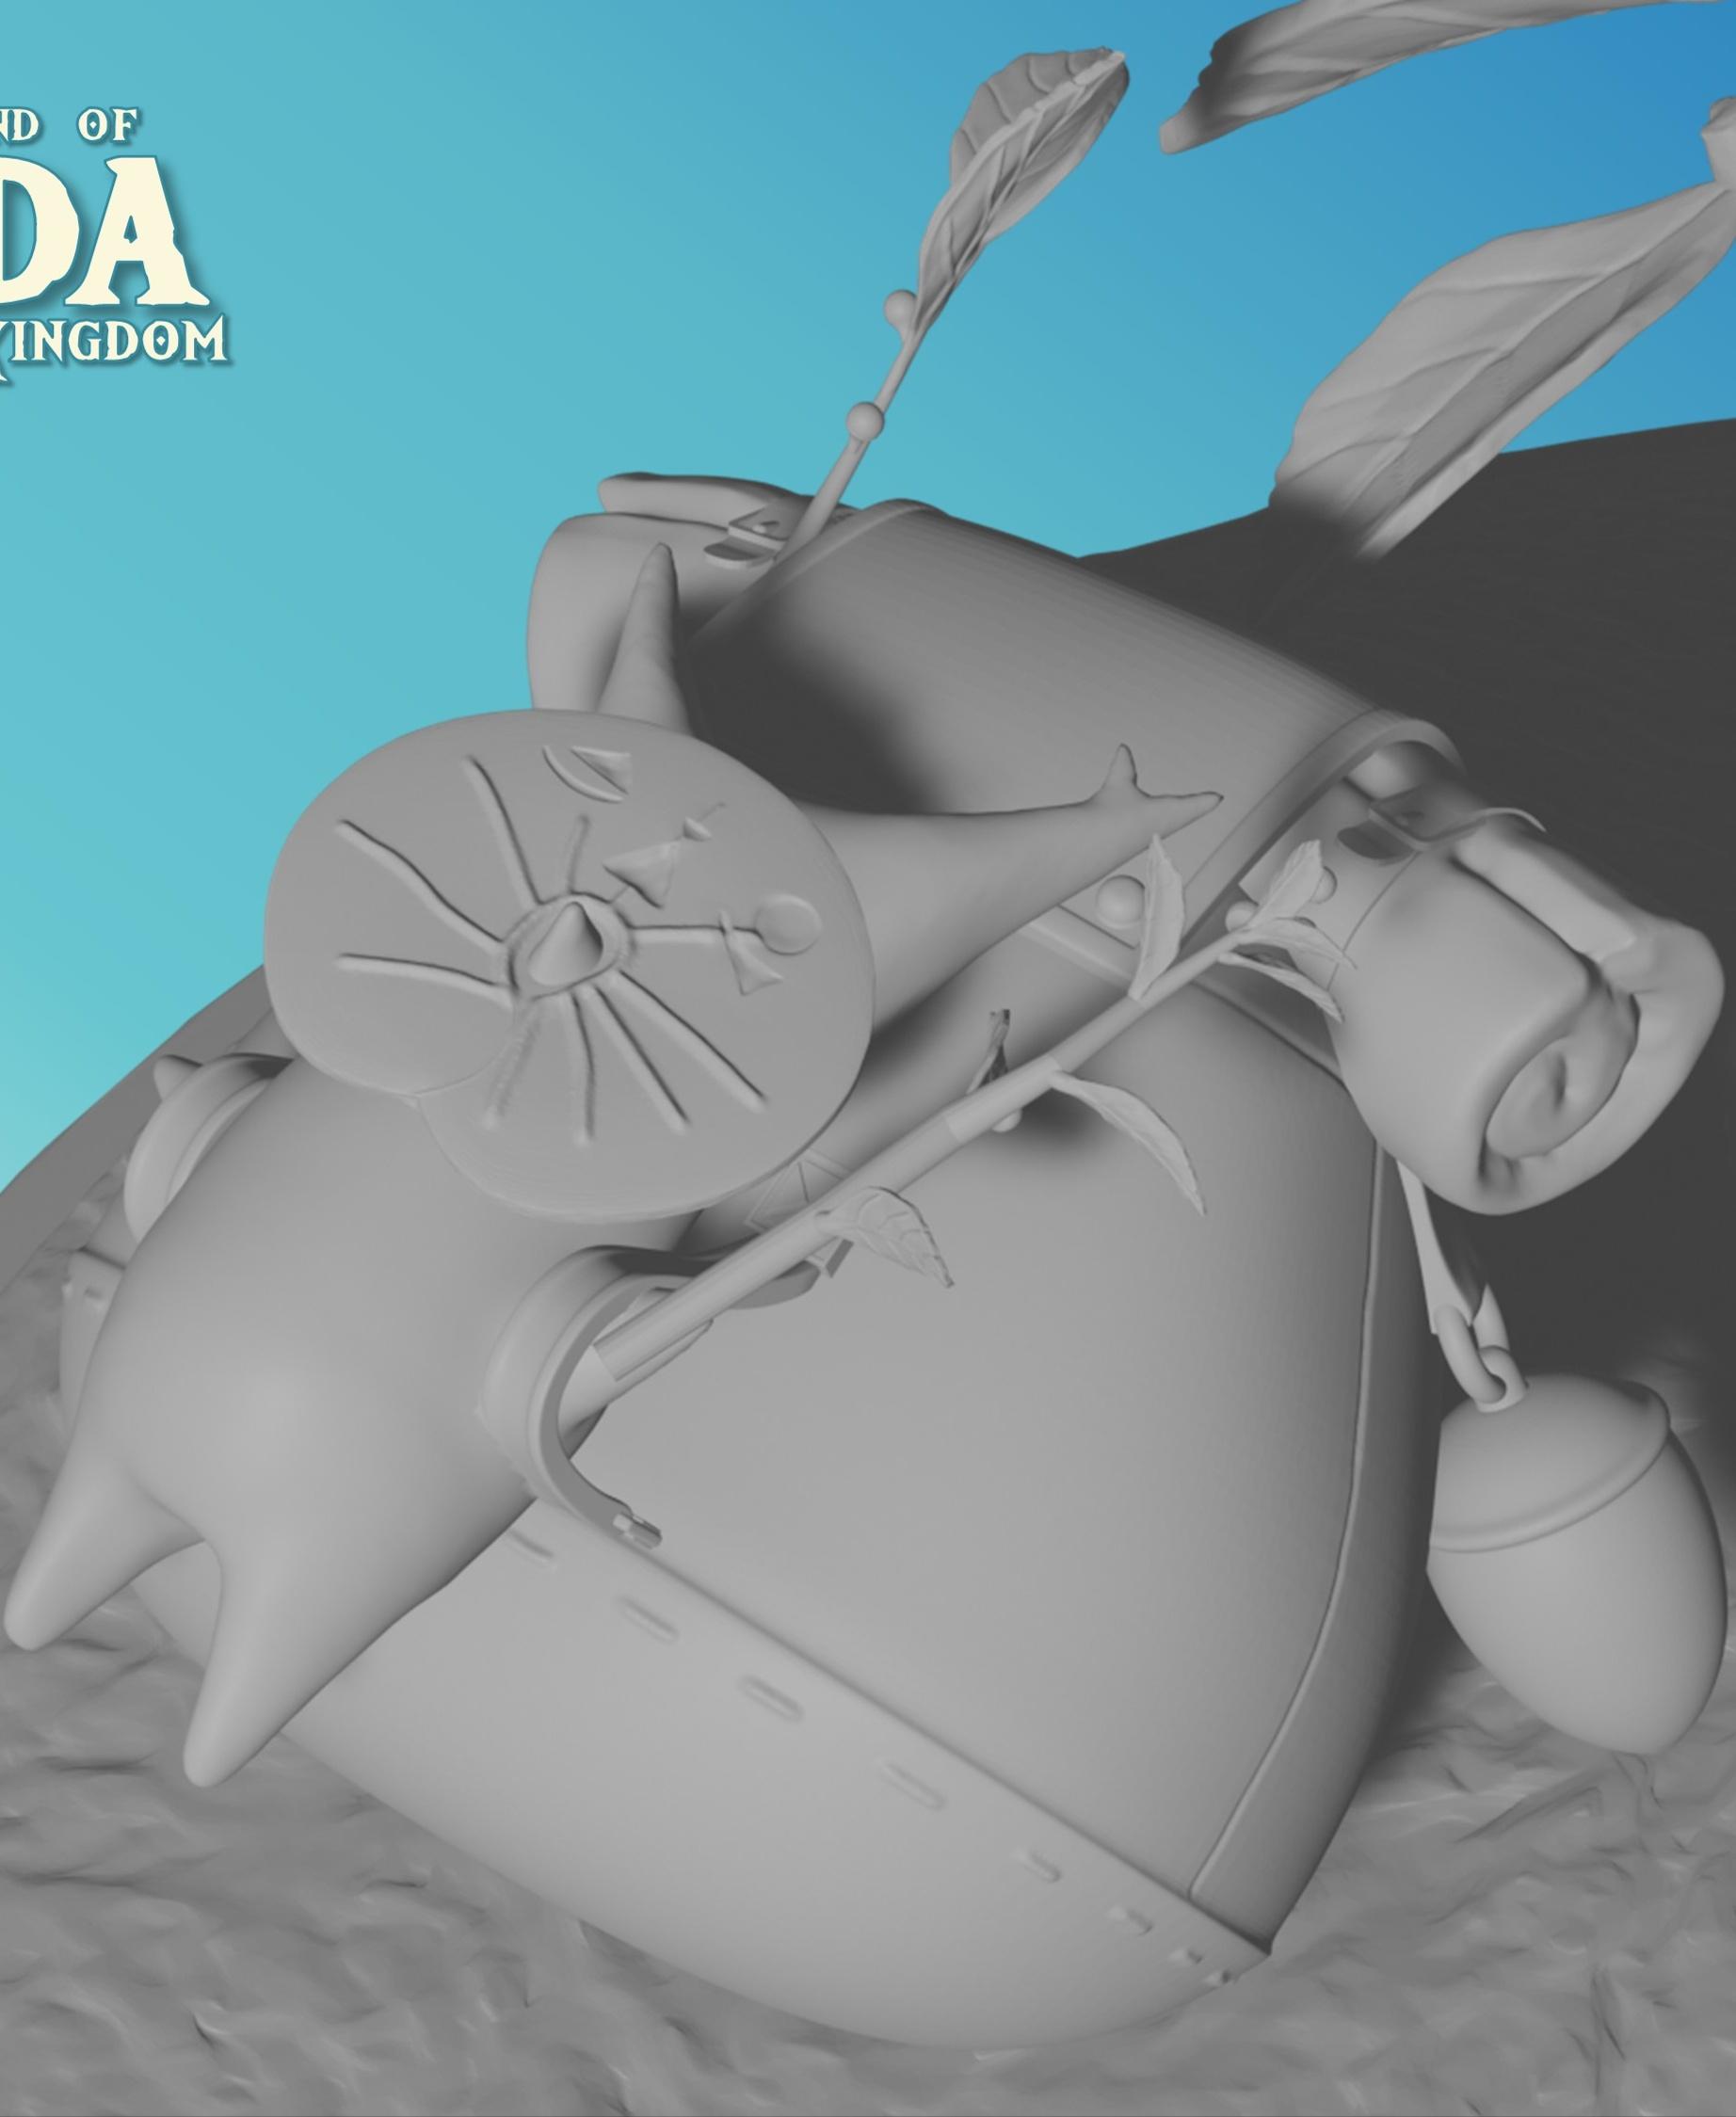 Korok Diorama - Zelda Tears of the Kingdom 3d model